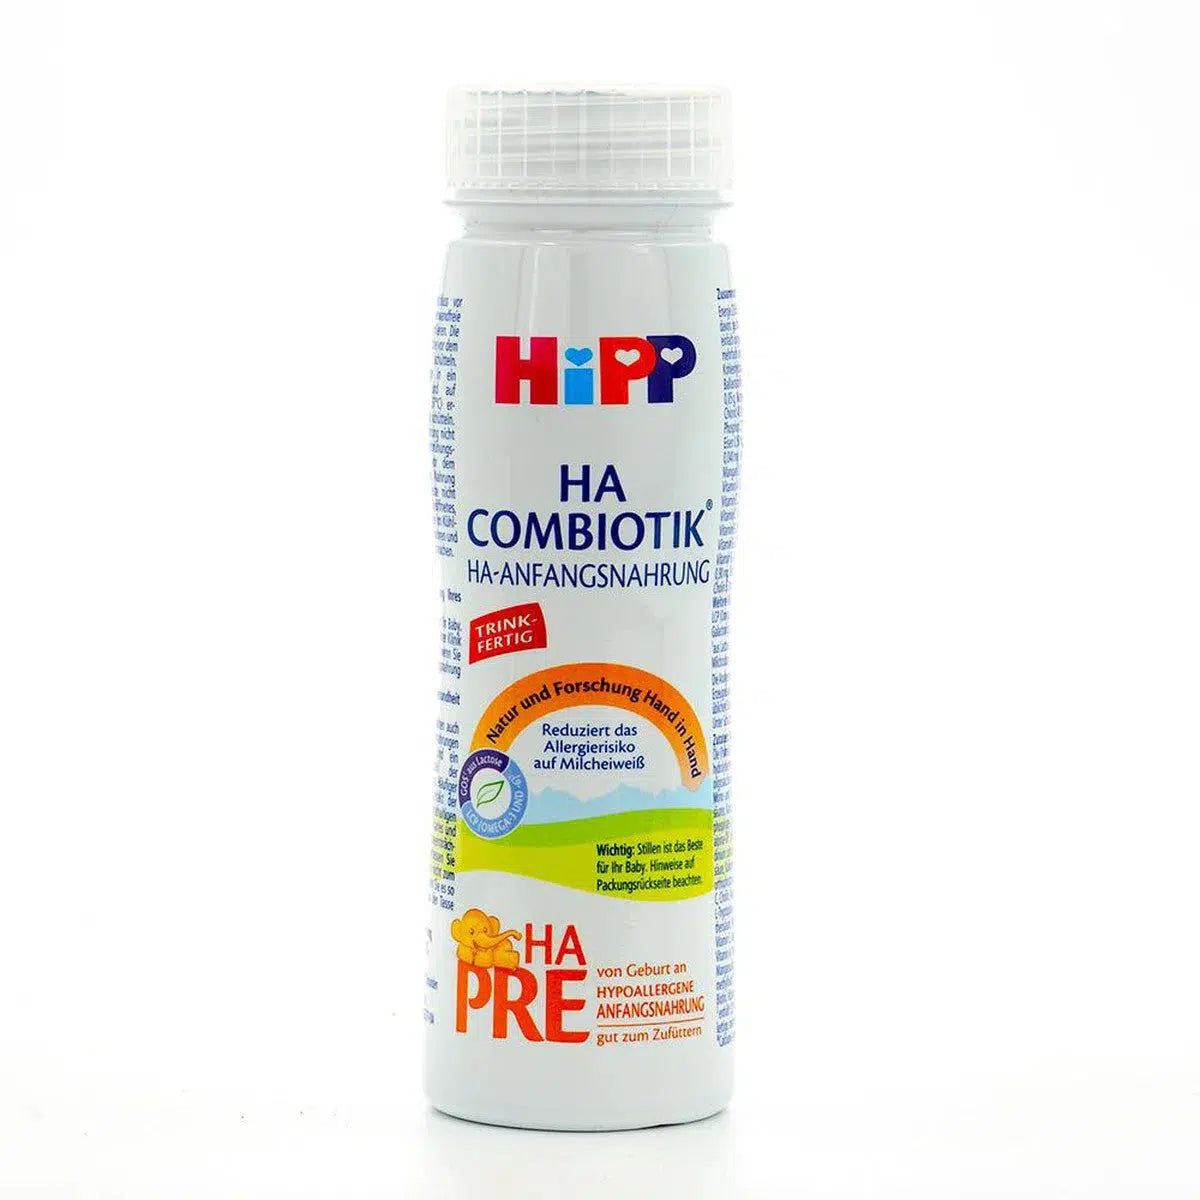 HiPP HA Stage PRE Ready to Feed Formula (200ml) - 60 Bottles